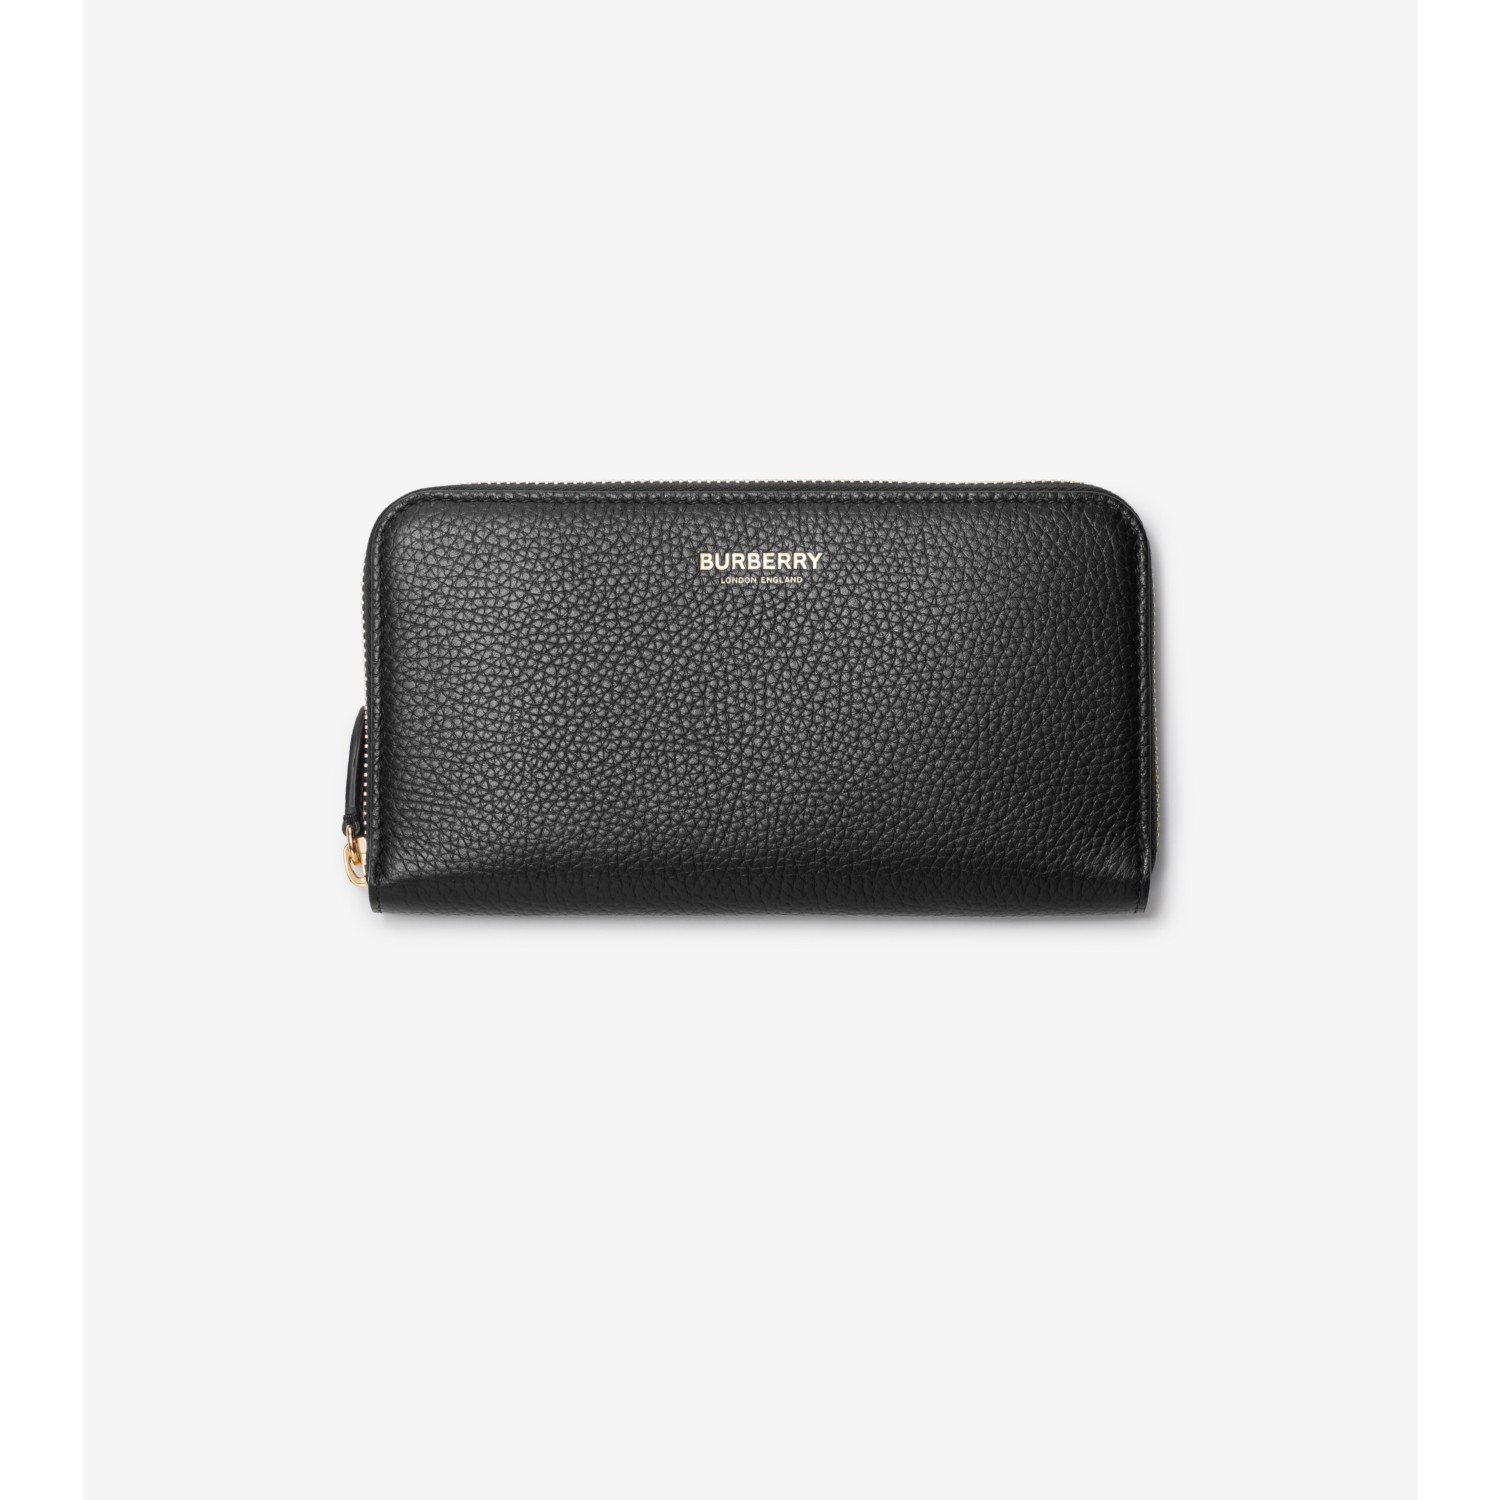 Leather Zip Wallet in Black